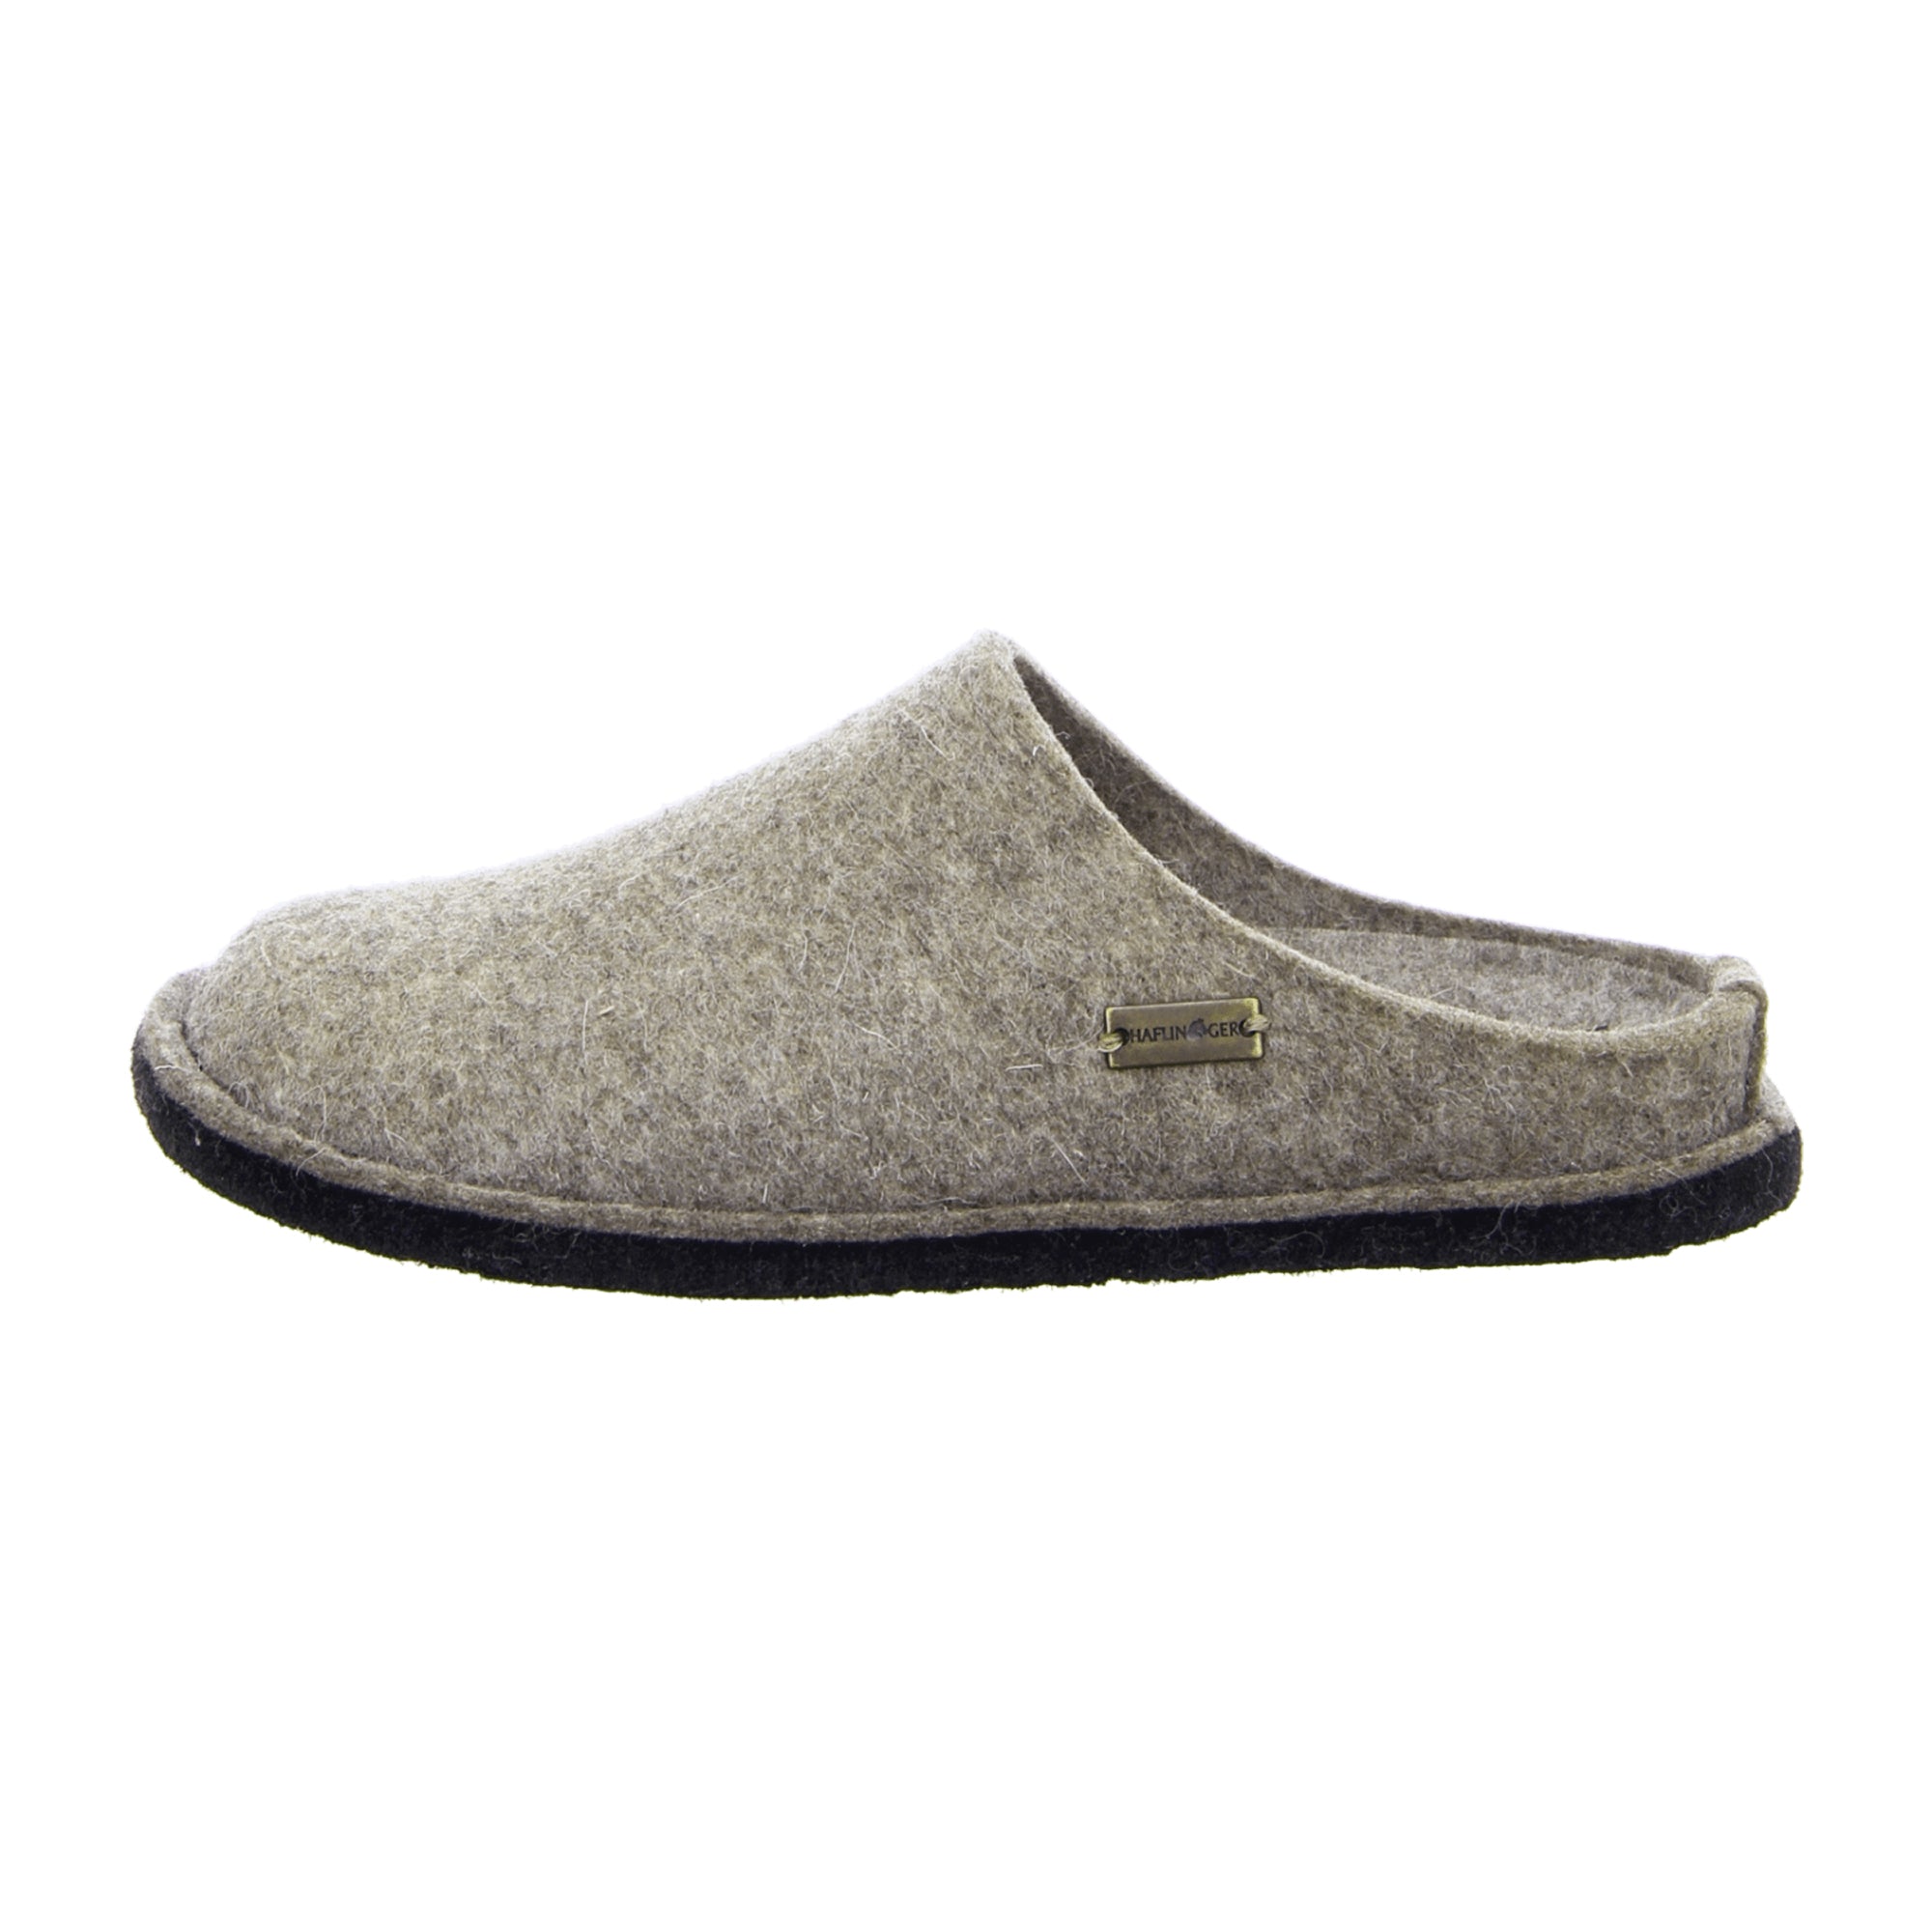 Haflinger Flair Soft Men's Slippers - Grey | Comfortable & Durable